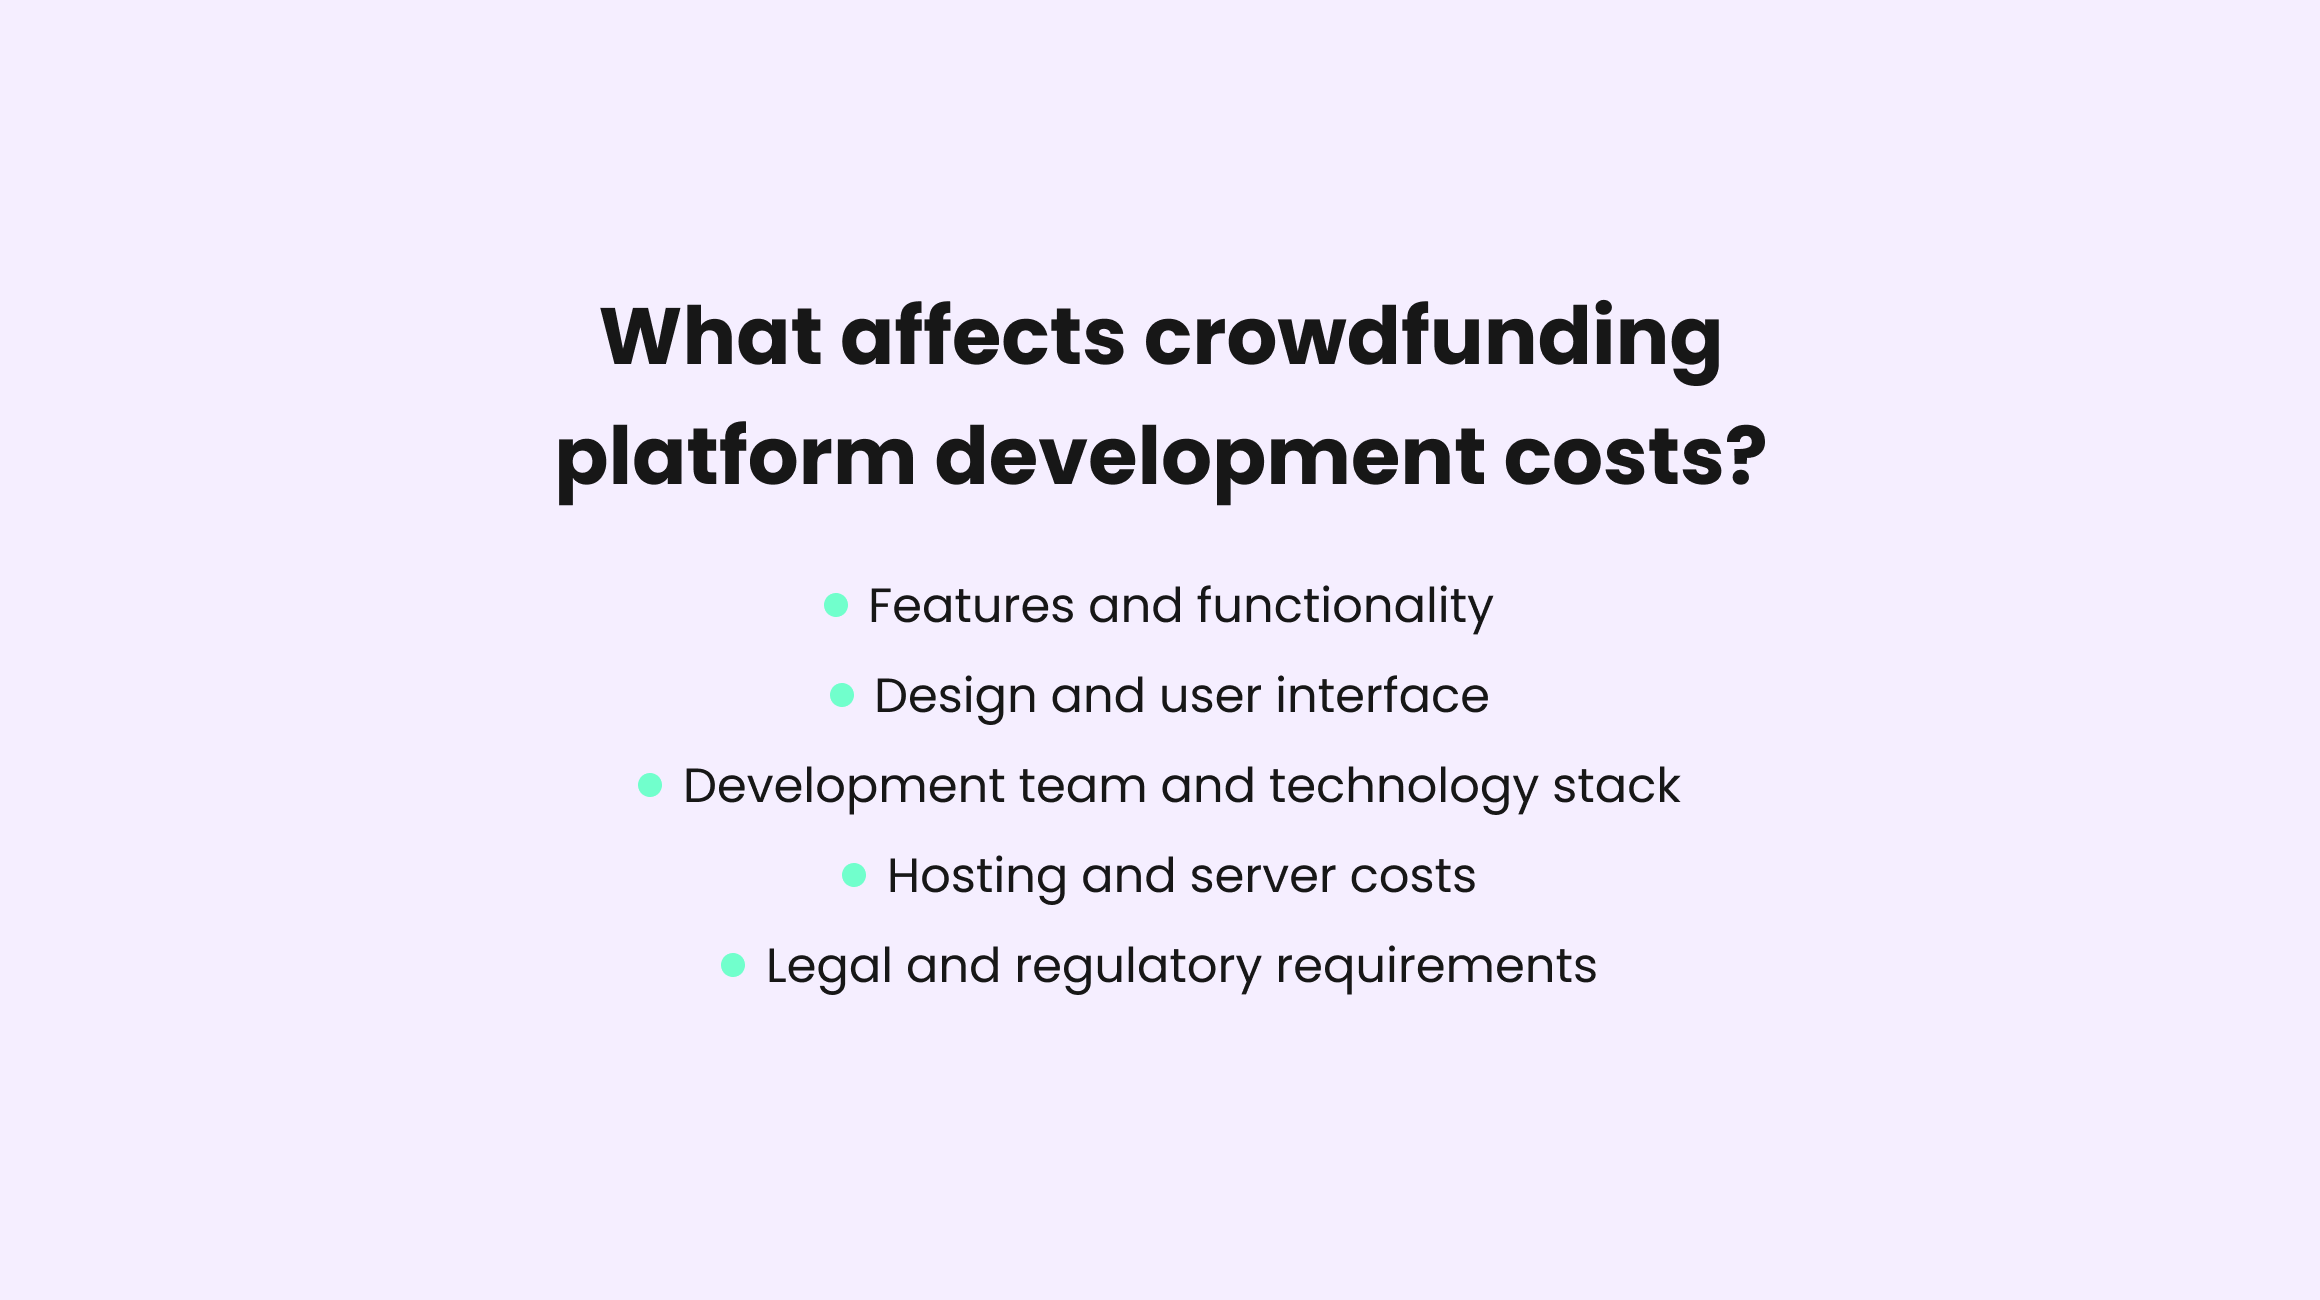 Factors affecting crowdfunding platform development costs